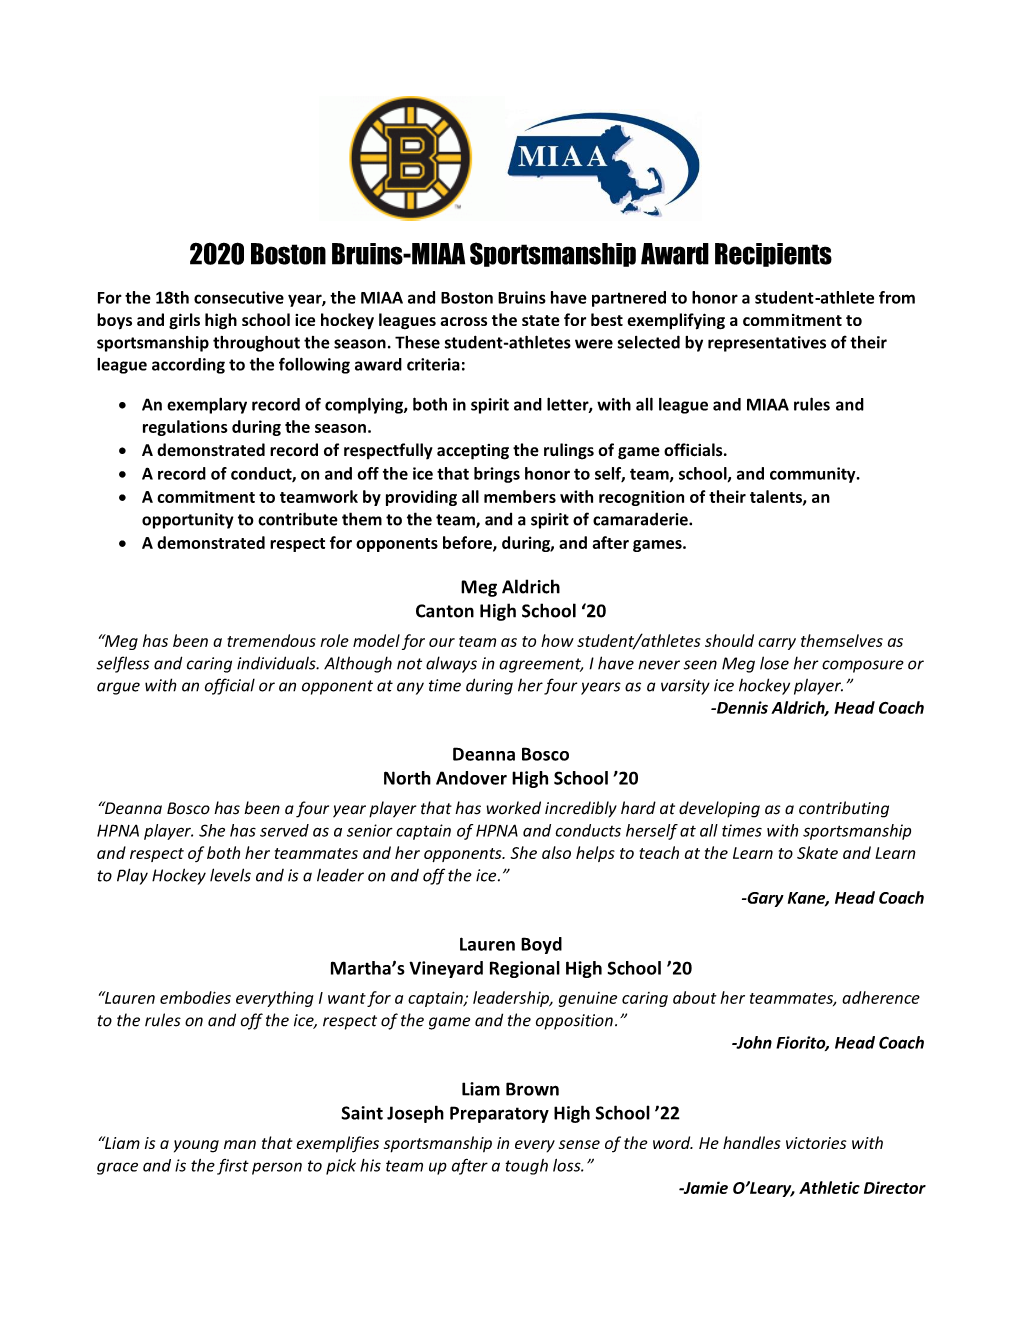 2020 Bruins Award Press Release